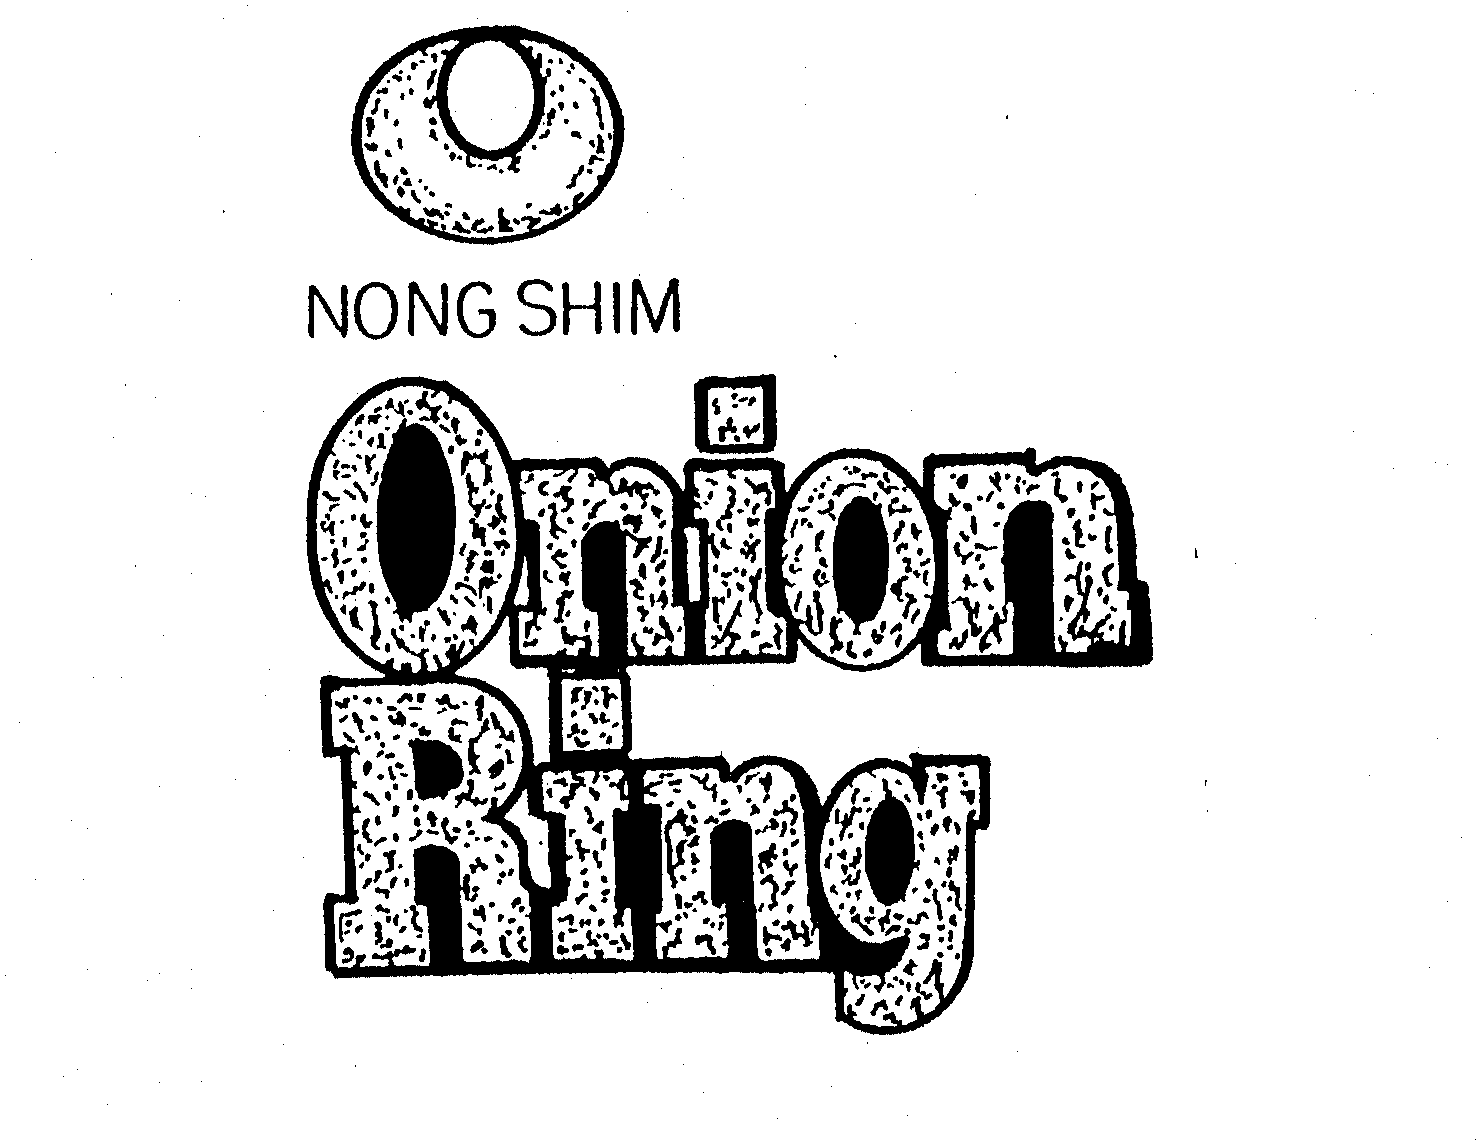  NONG SHIM ONION RING